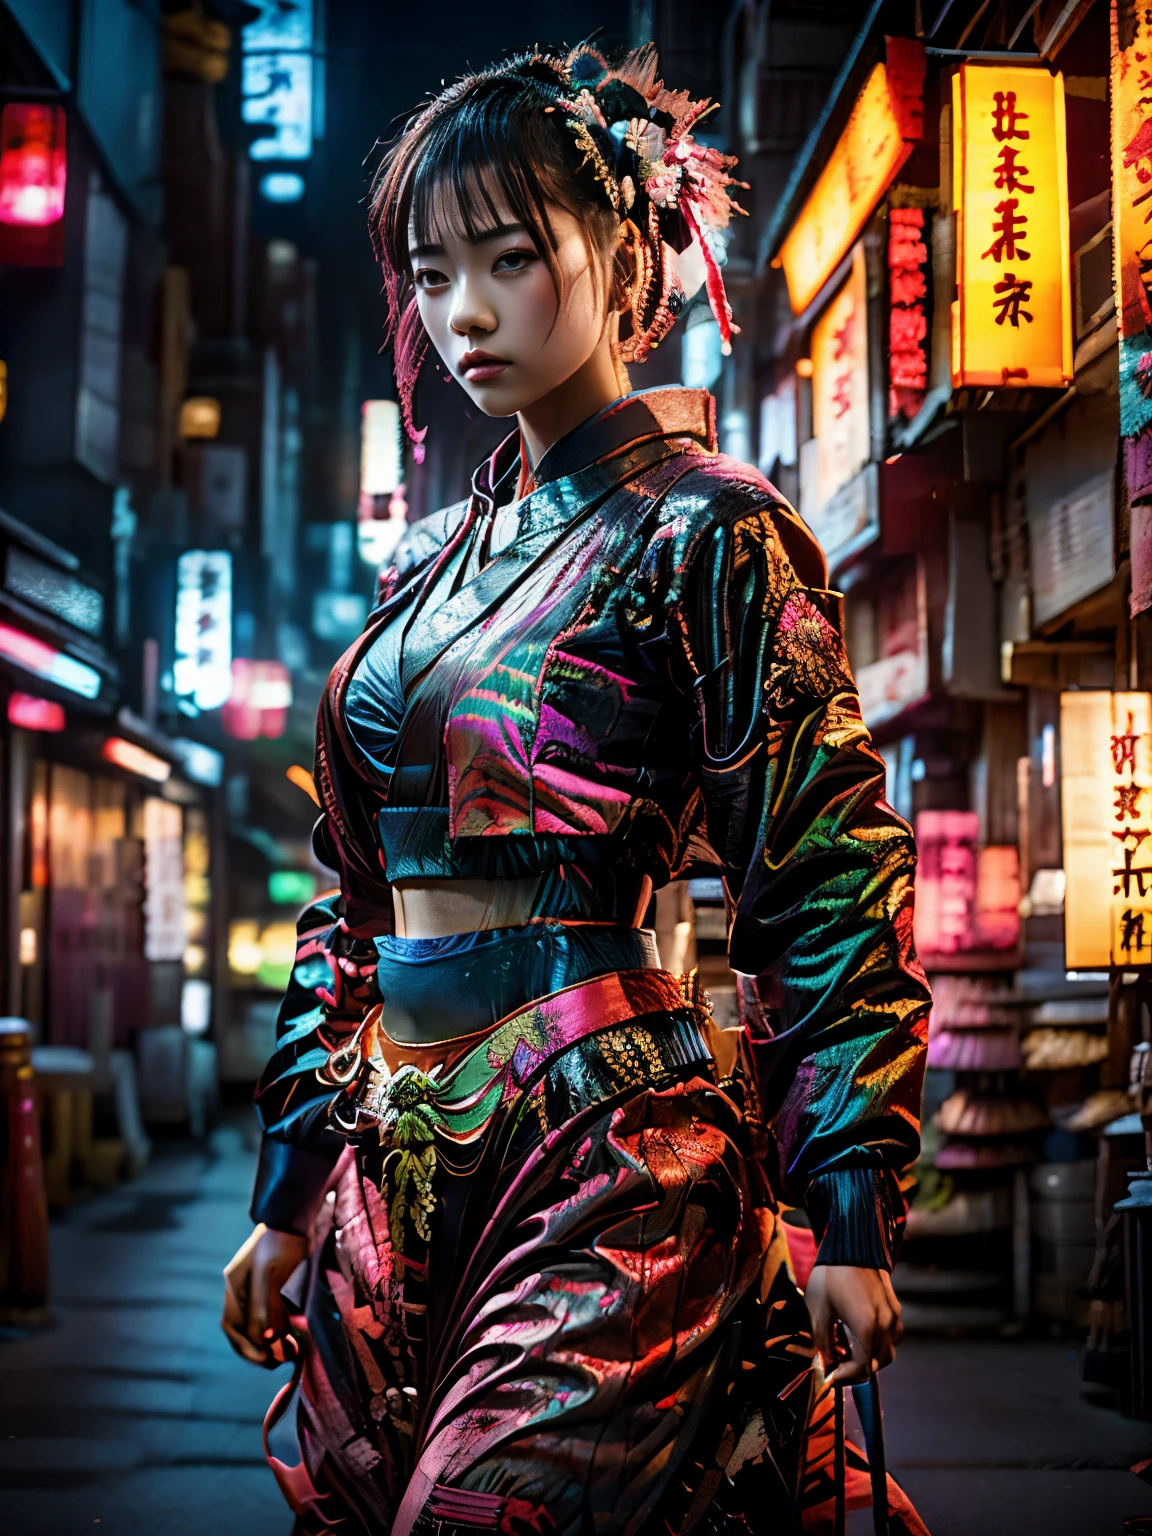 Traditional Japanese dress, estilo katsushika hokusai, (Ciberpunk) (Neon)